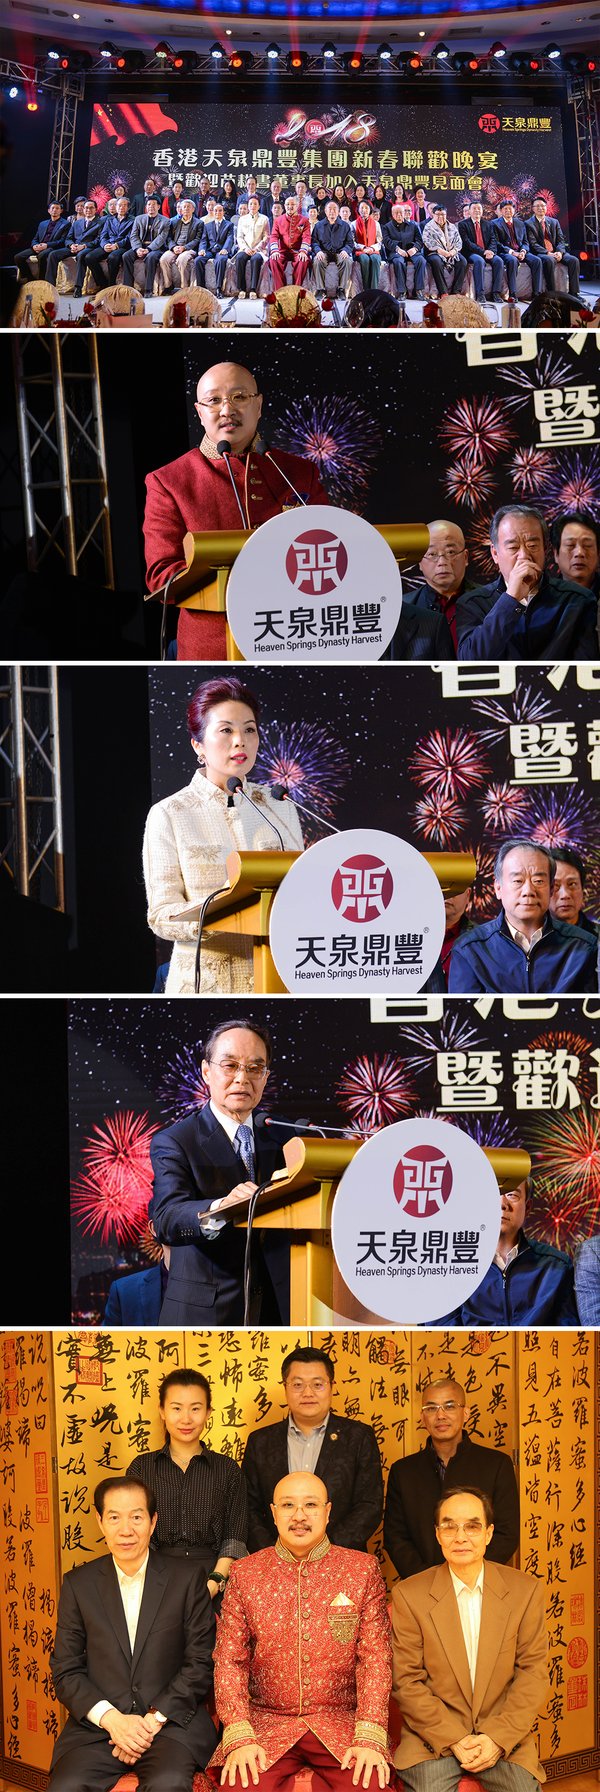 Photos of Dato’ Sri Prof. Ng, Tat-yung, Datin Sri Dr. Ng, Tsz-yan Irys, Mr. Miao Gengshu, and Dr. Lo, Man-tuen